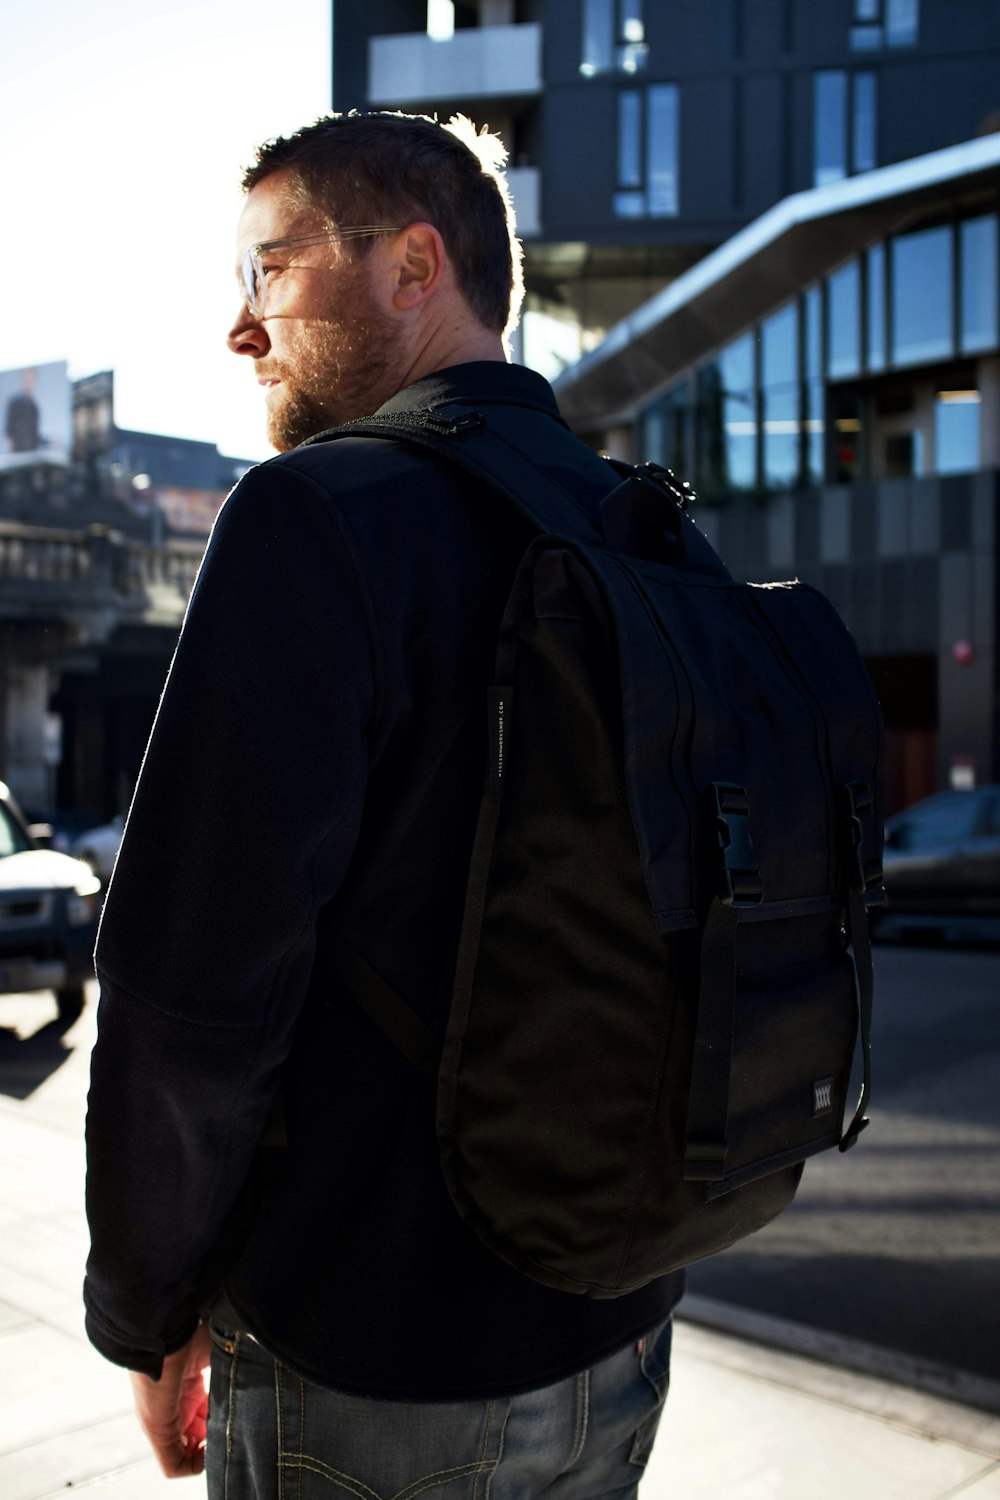 man in black jacket and black backpack standing on sidewalk during daytime